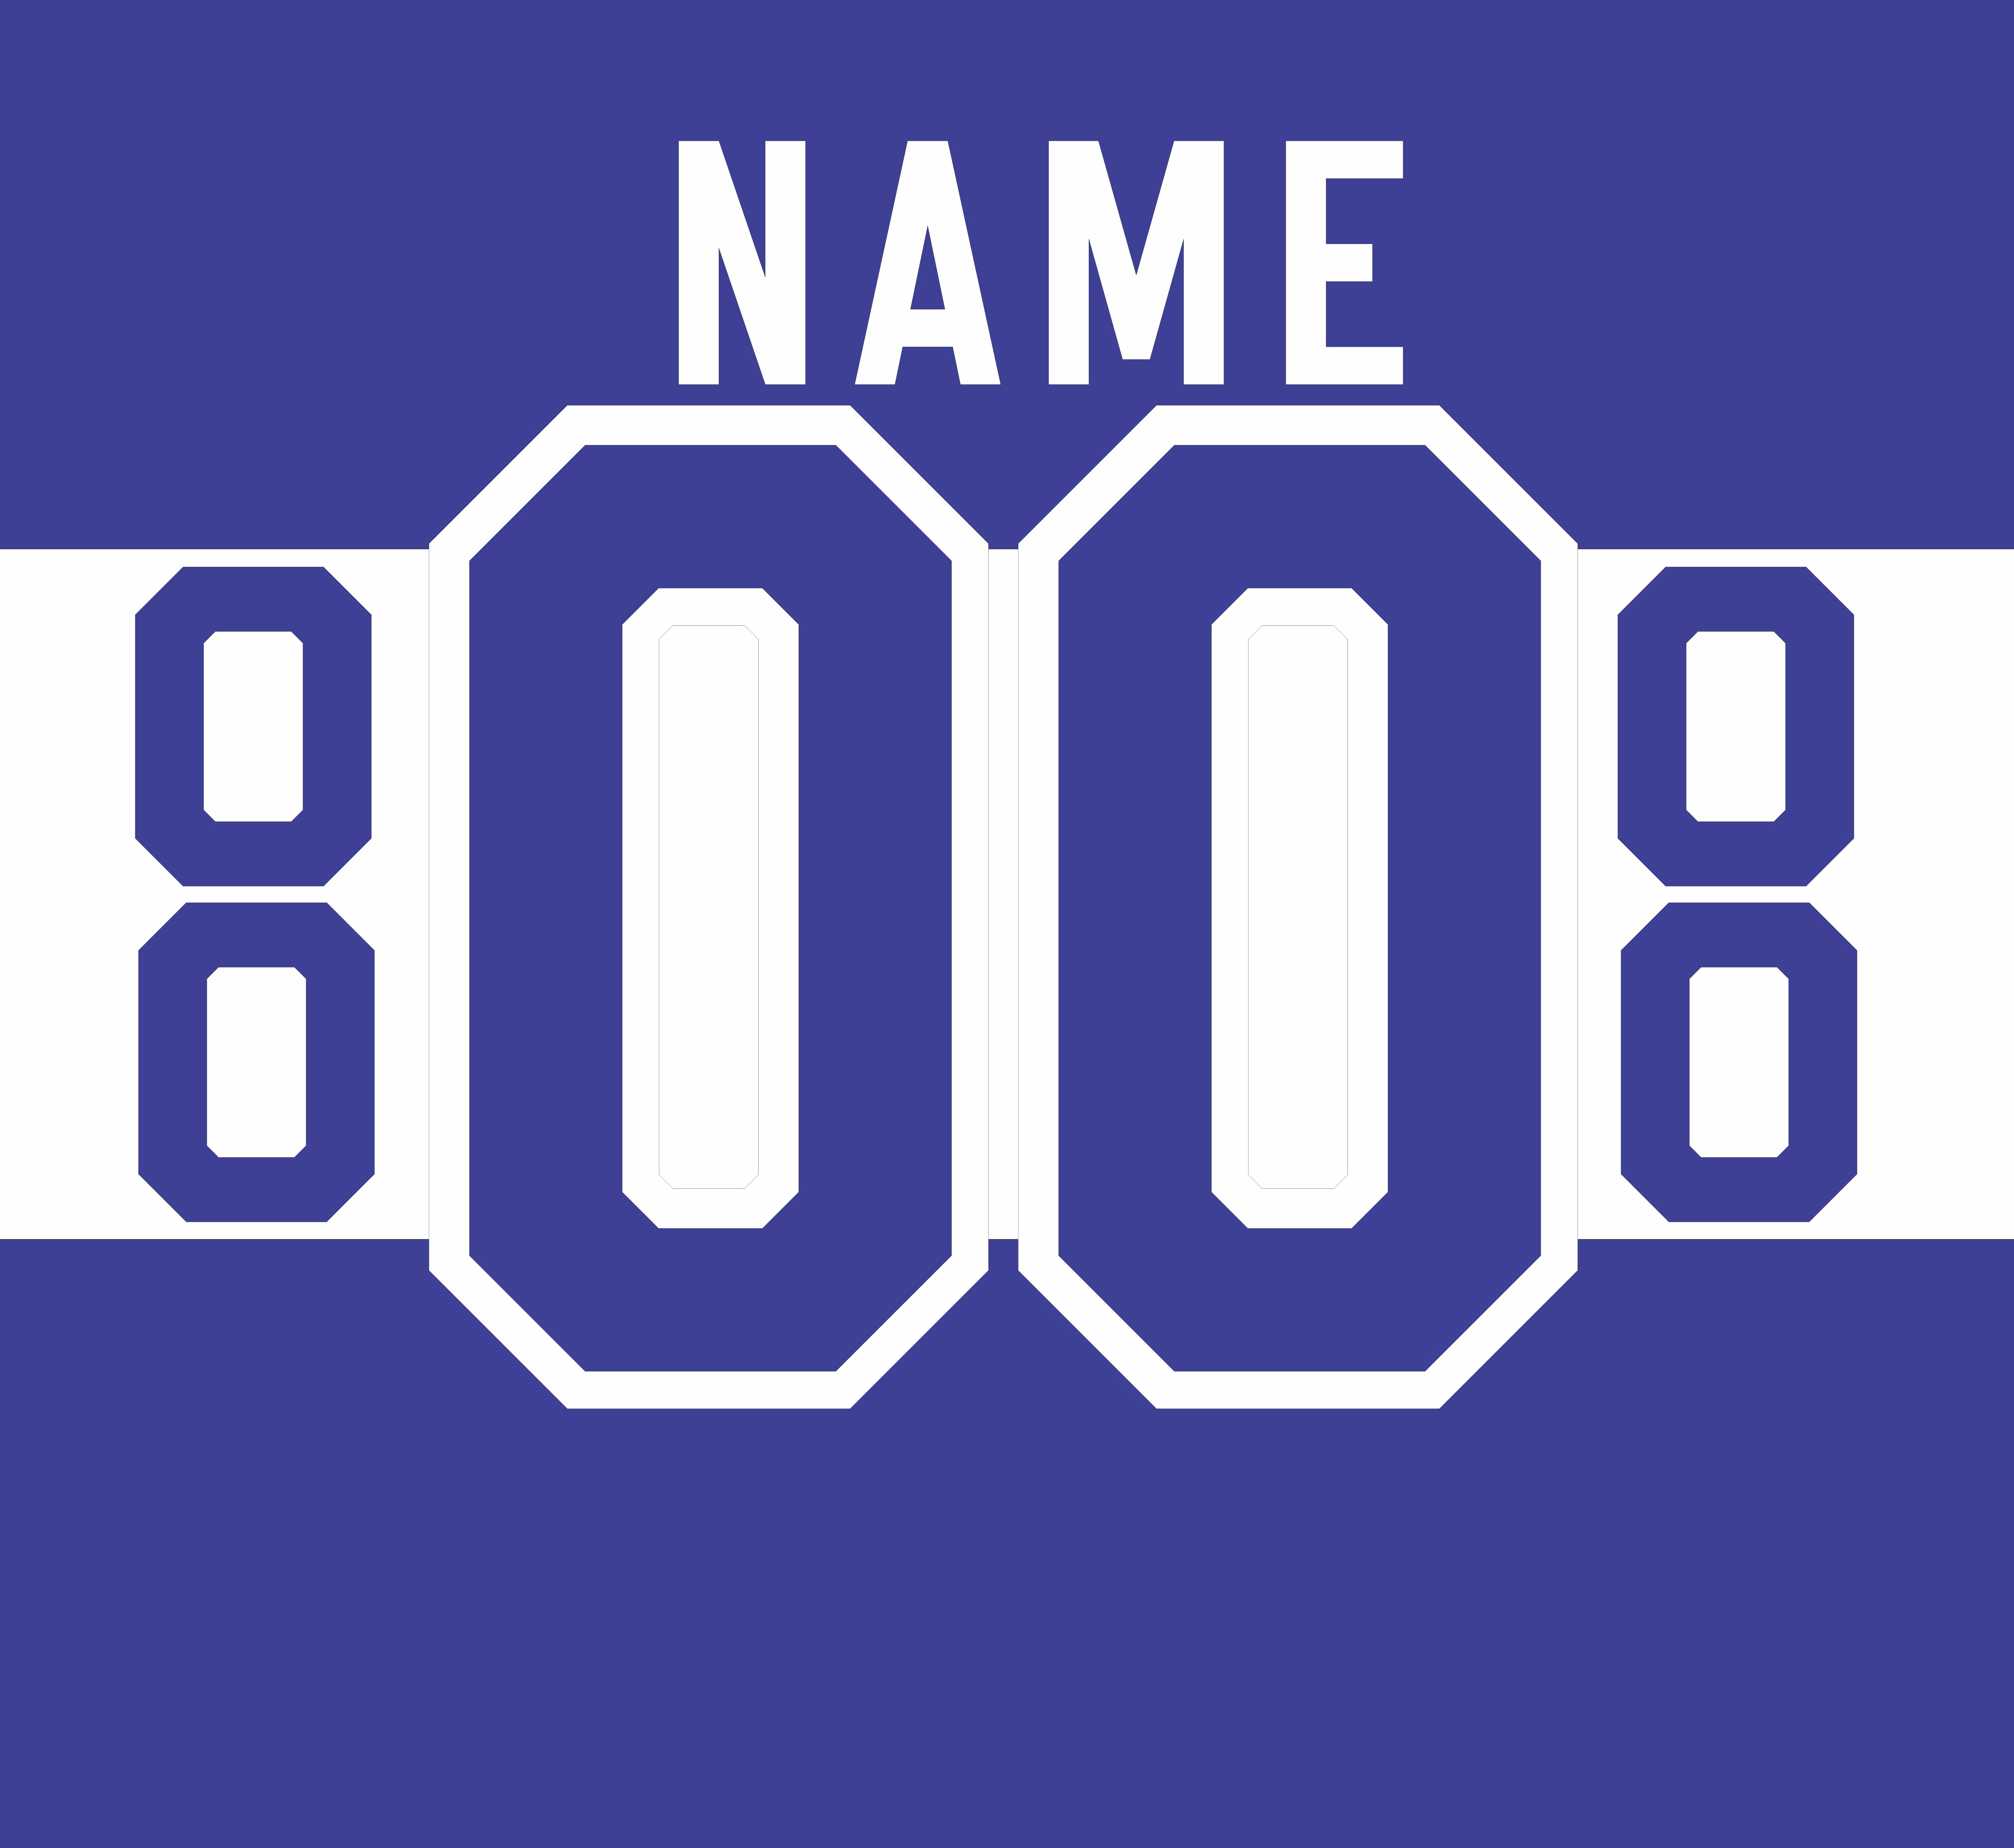 NHL Centennial Classic Name & Number Kits - Stahls' Blog